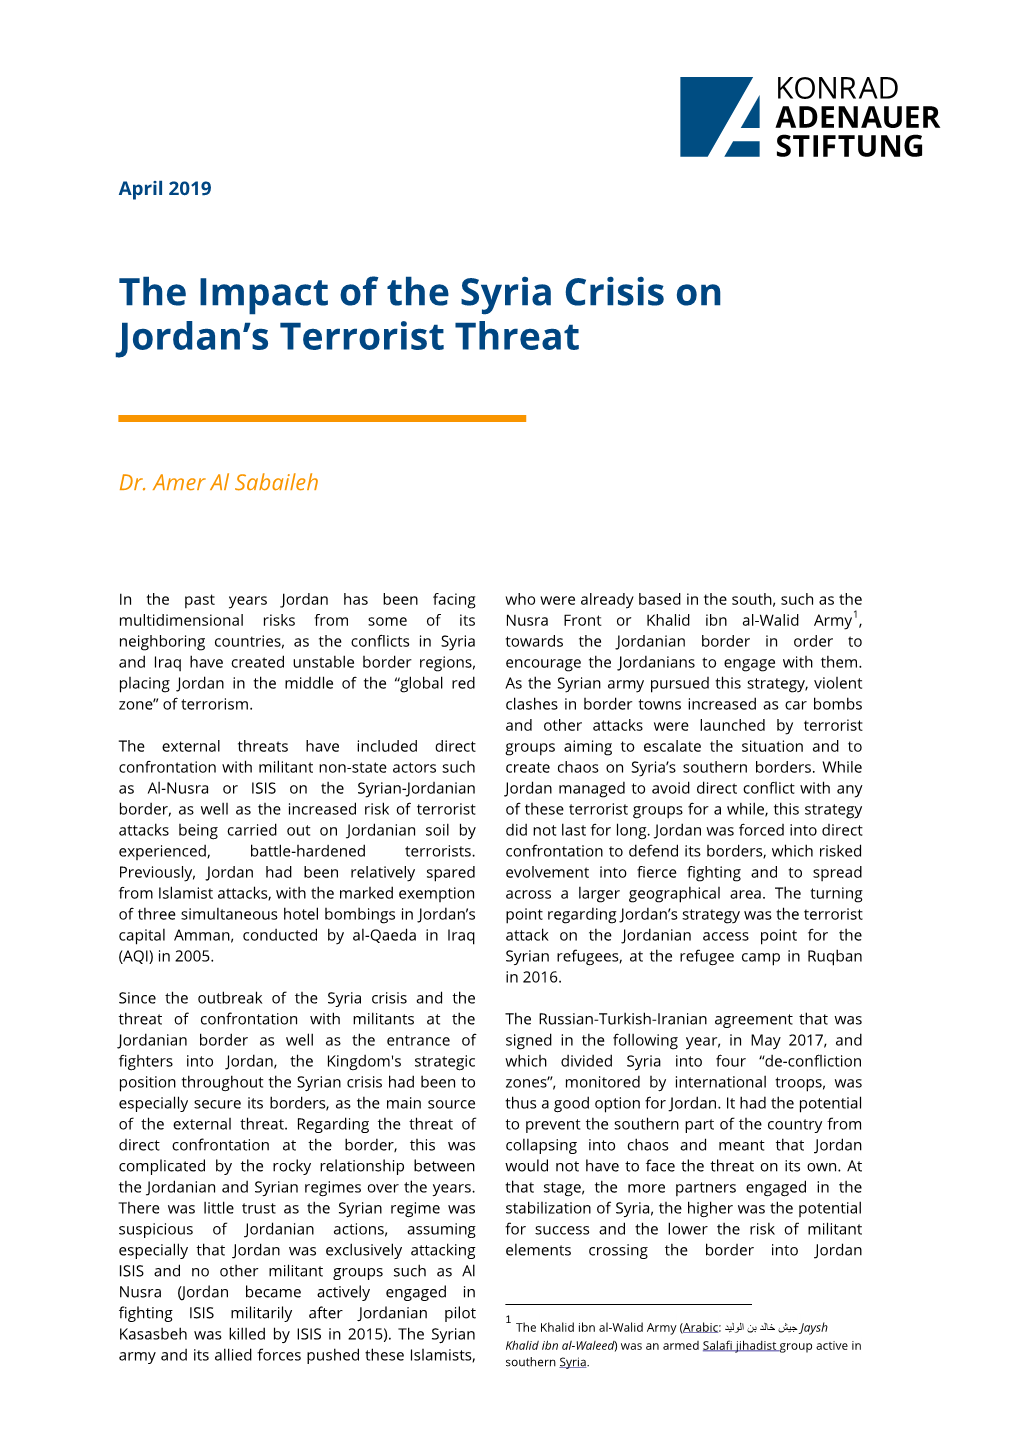 The Impact of the Syria Crisis on Jordan's Terrorist Threat